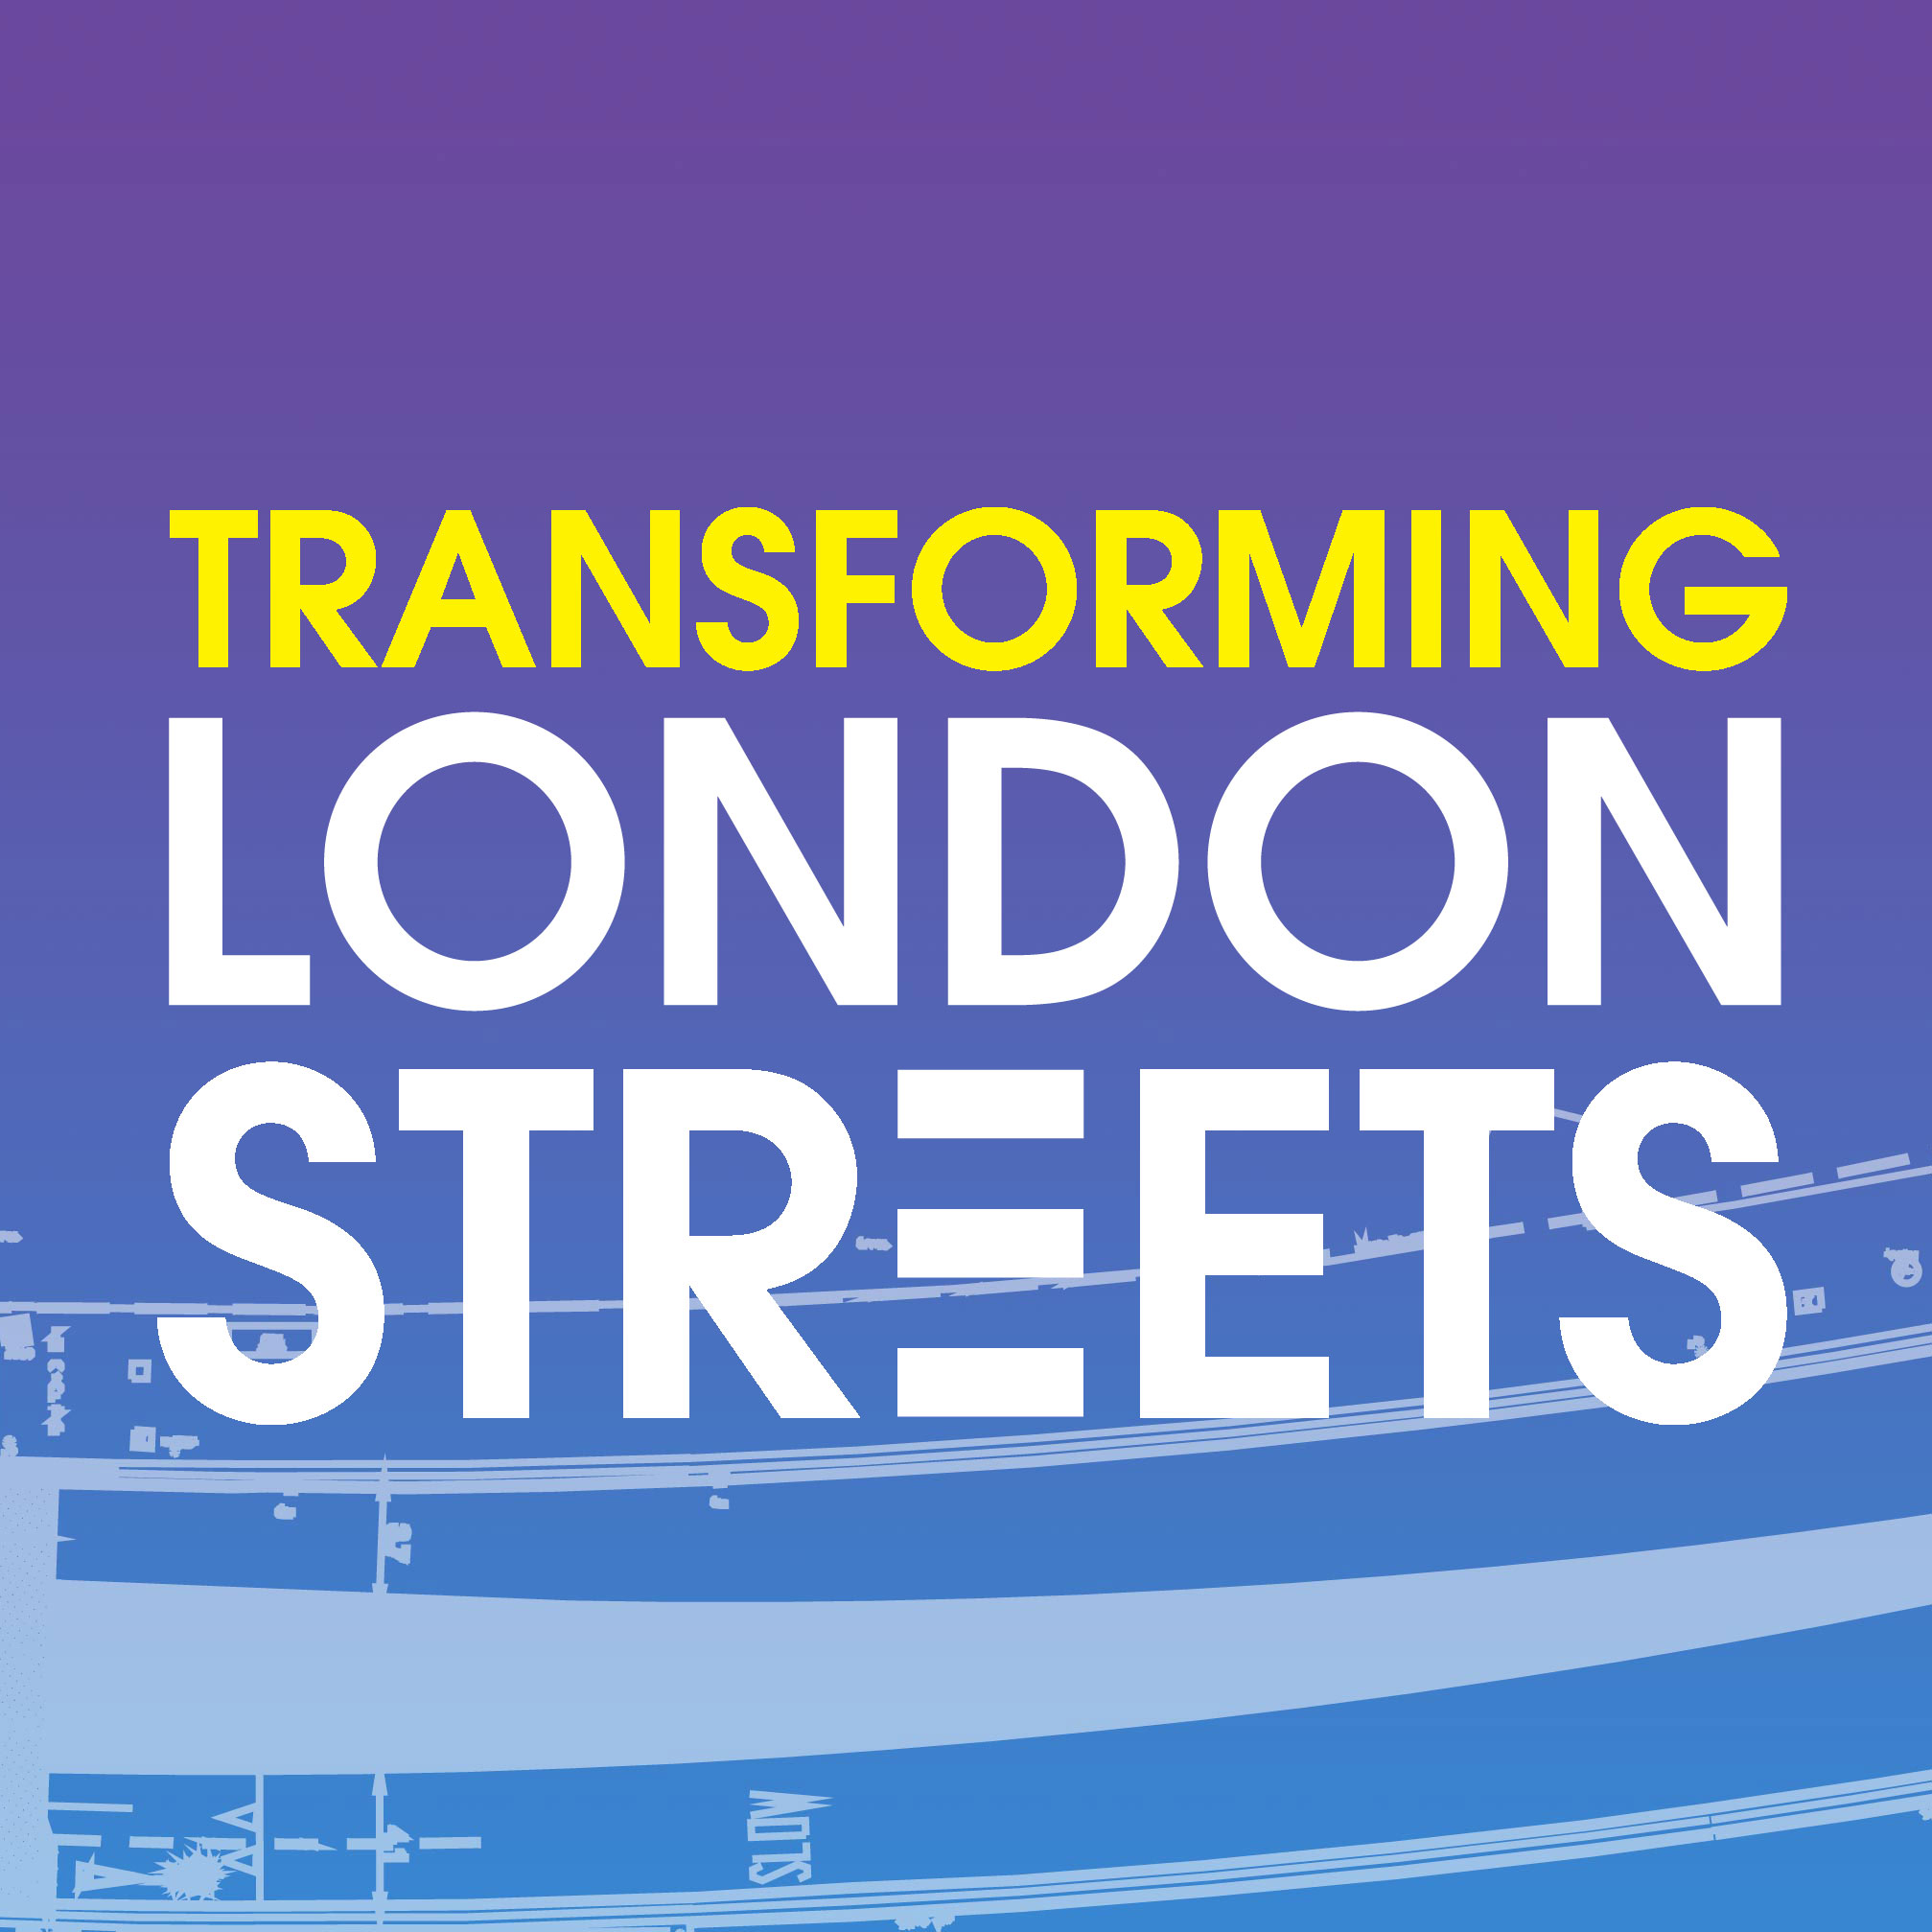 Transforming London Streets